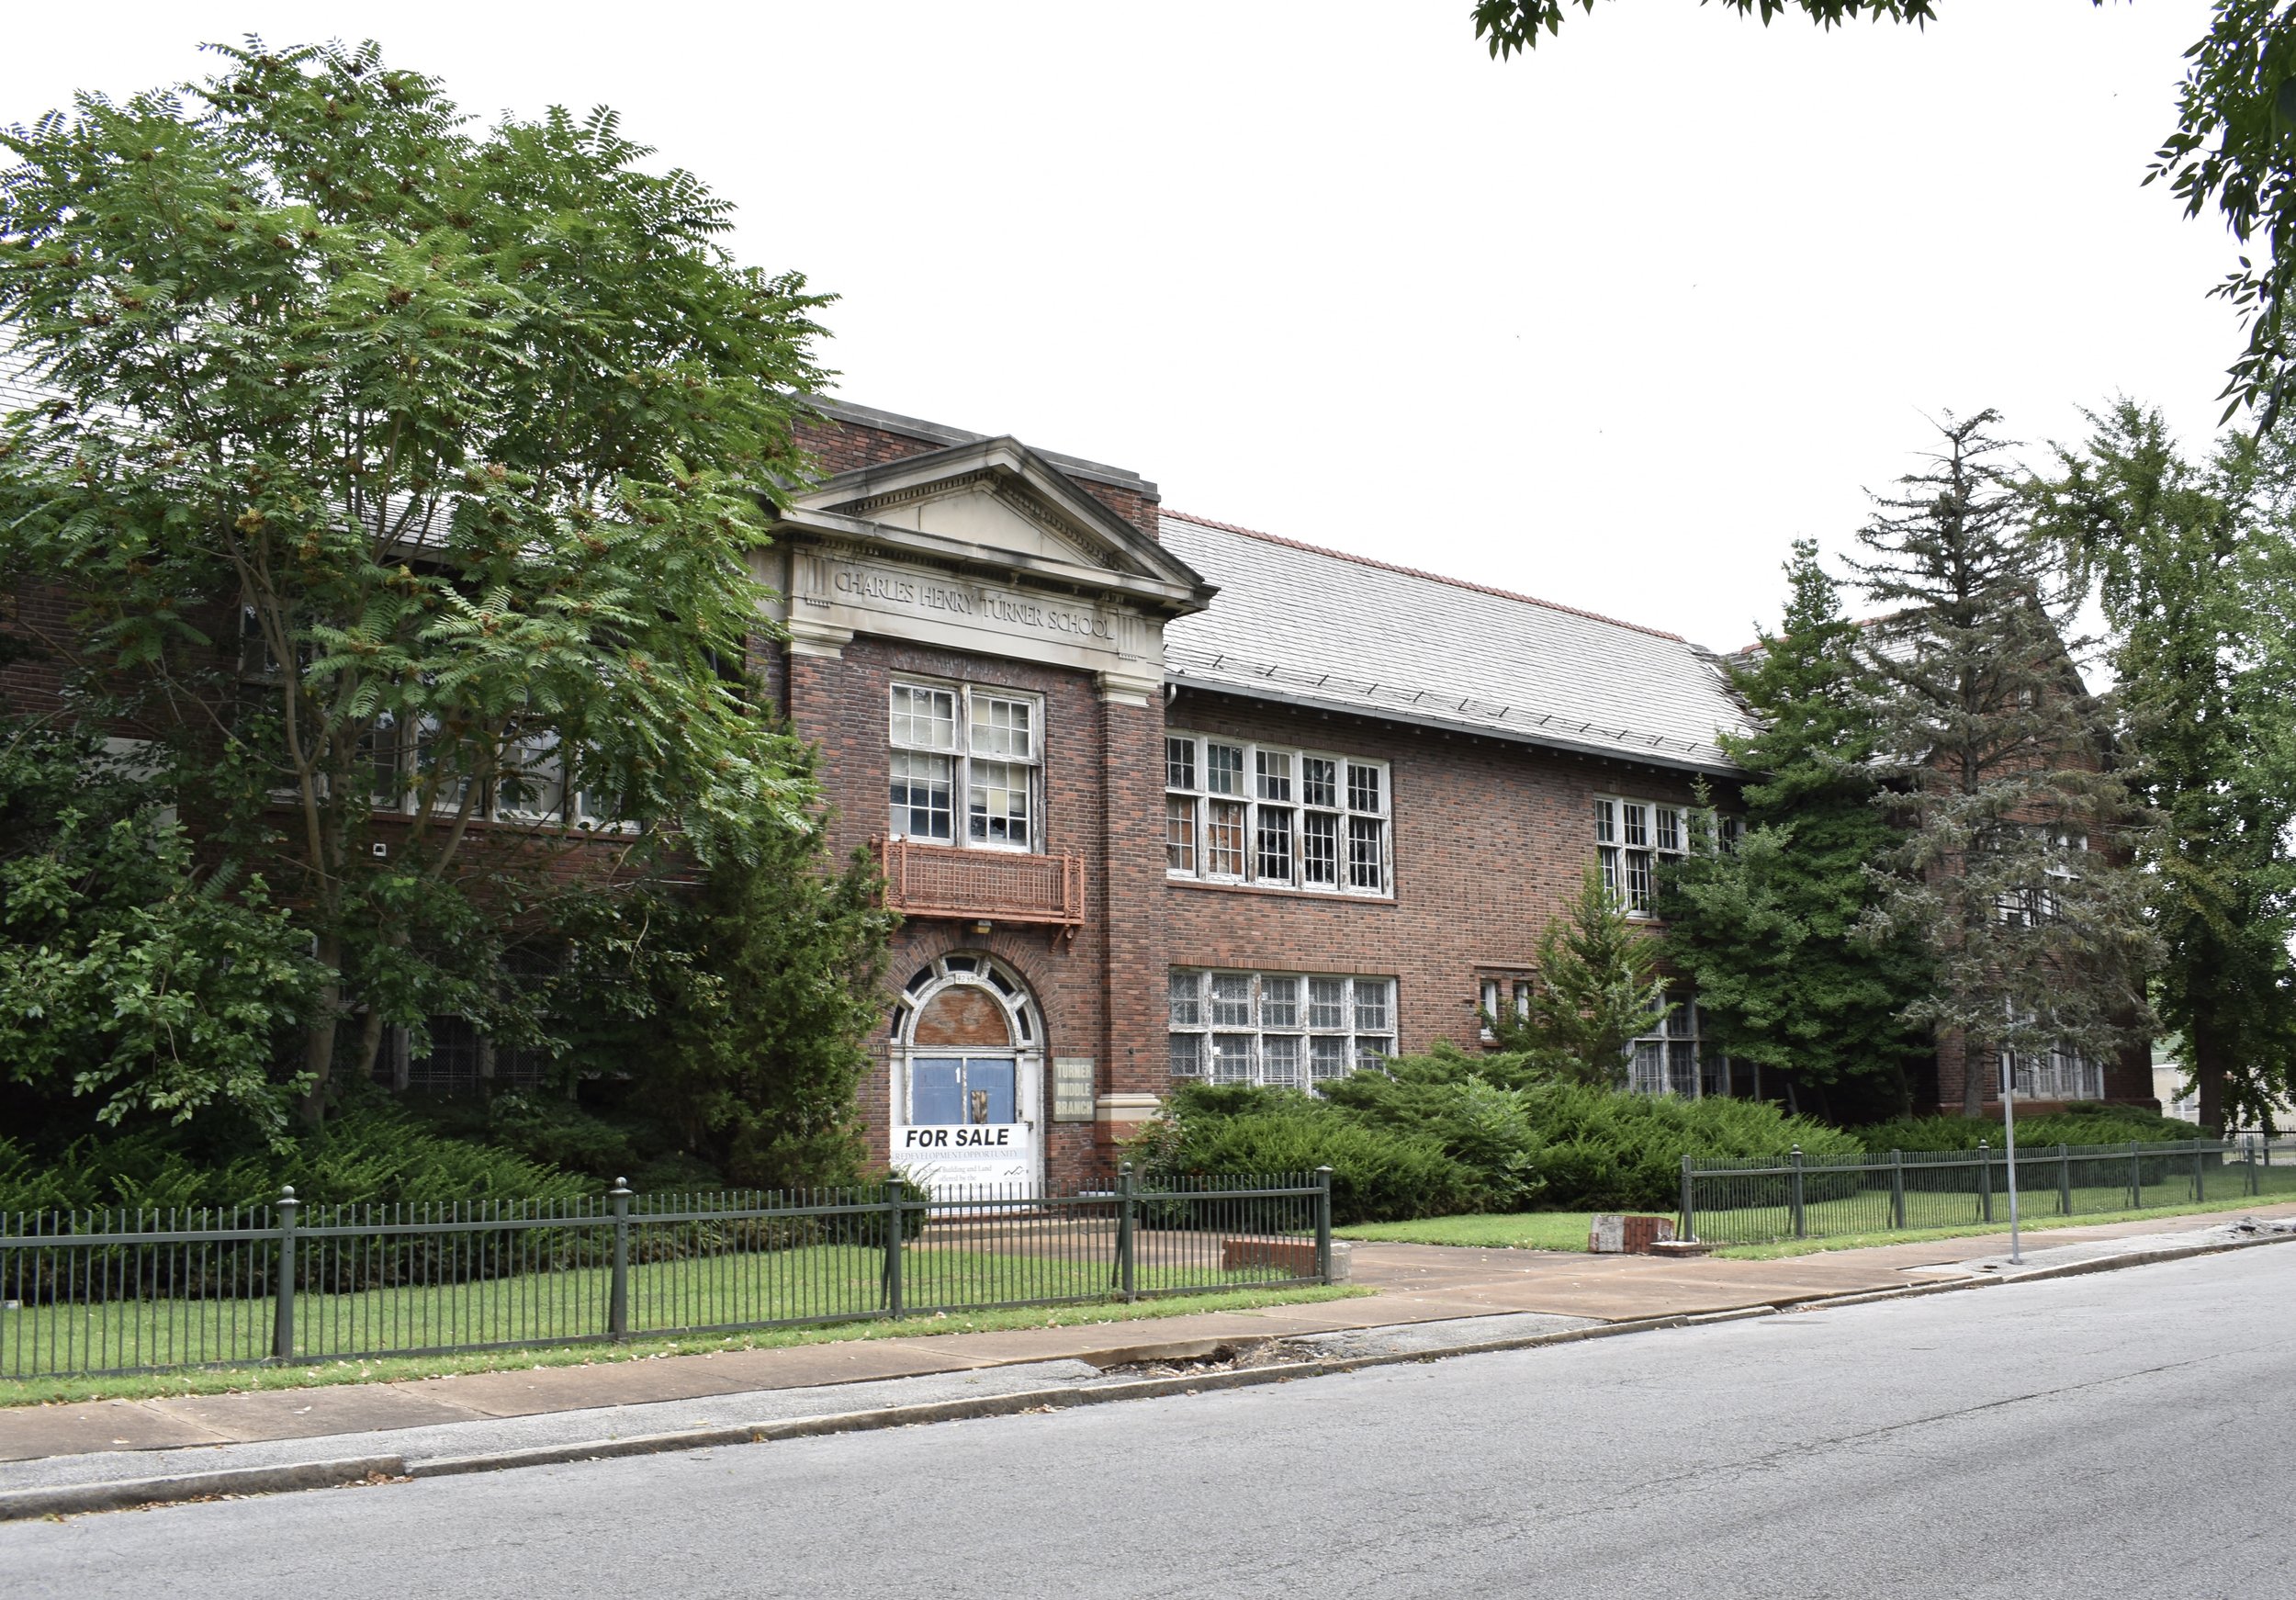 St. Louis Public Schools Will Close 8 Schools, Sparing 3